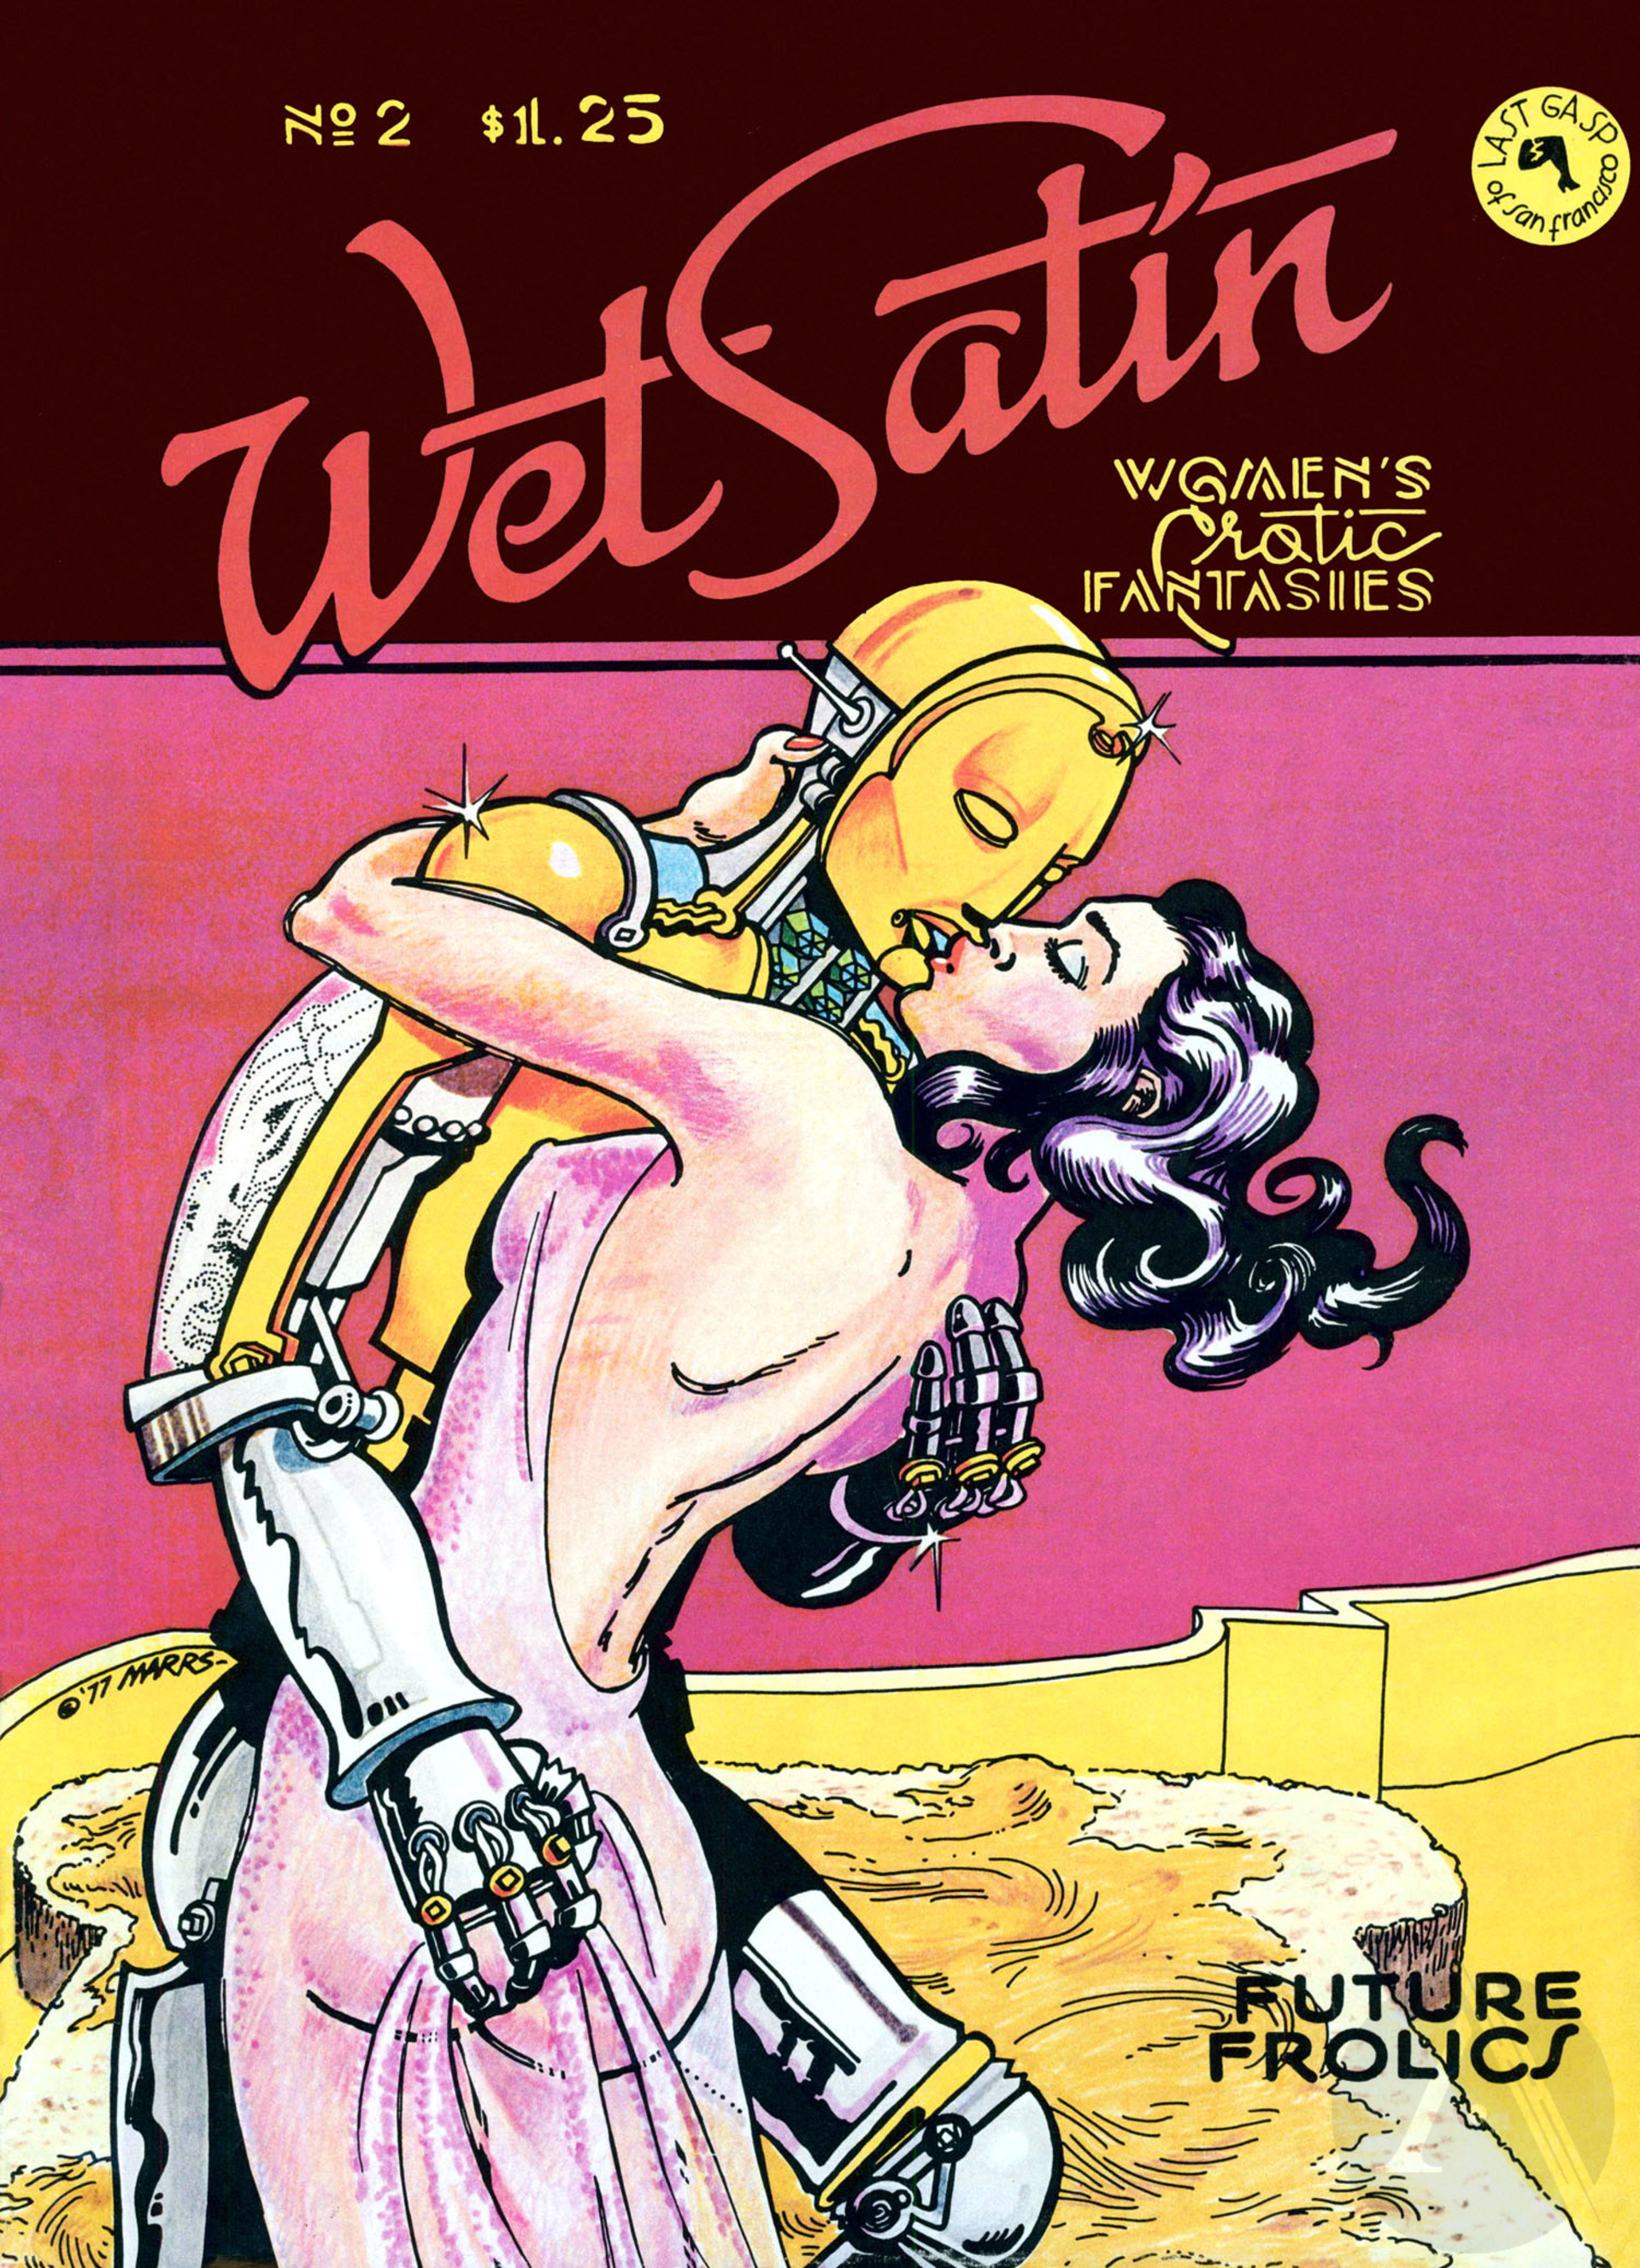 Read online Wet Satin comic -  Issue #2 - 1